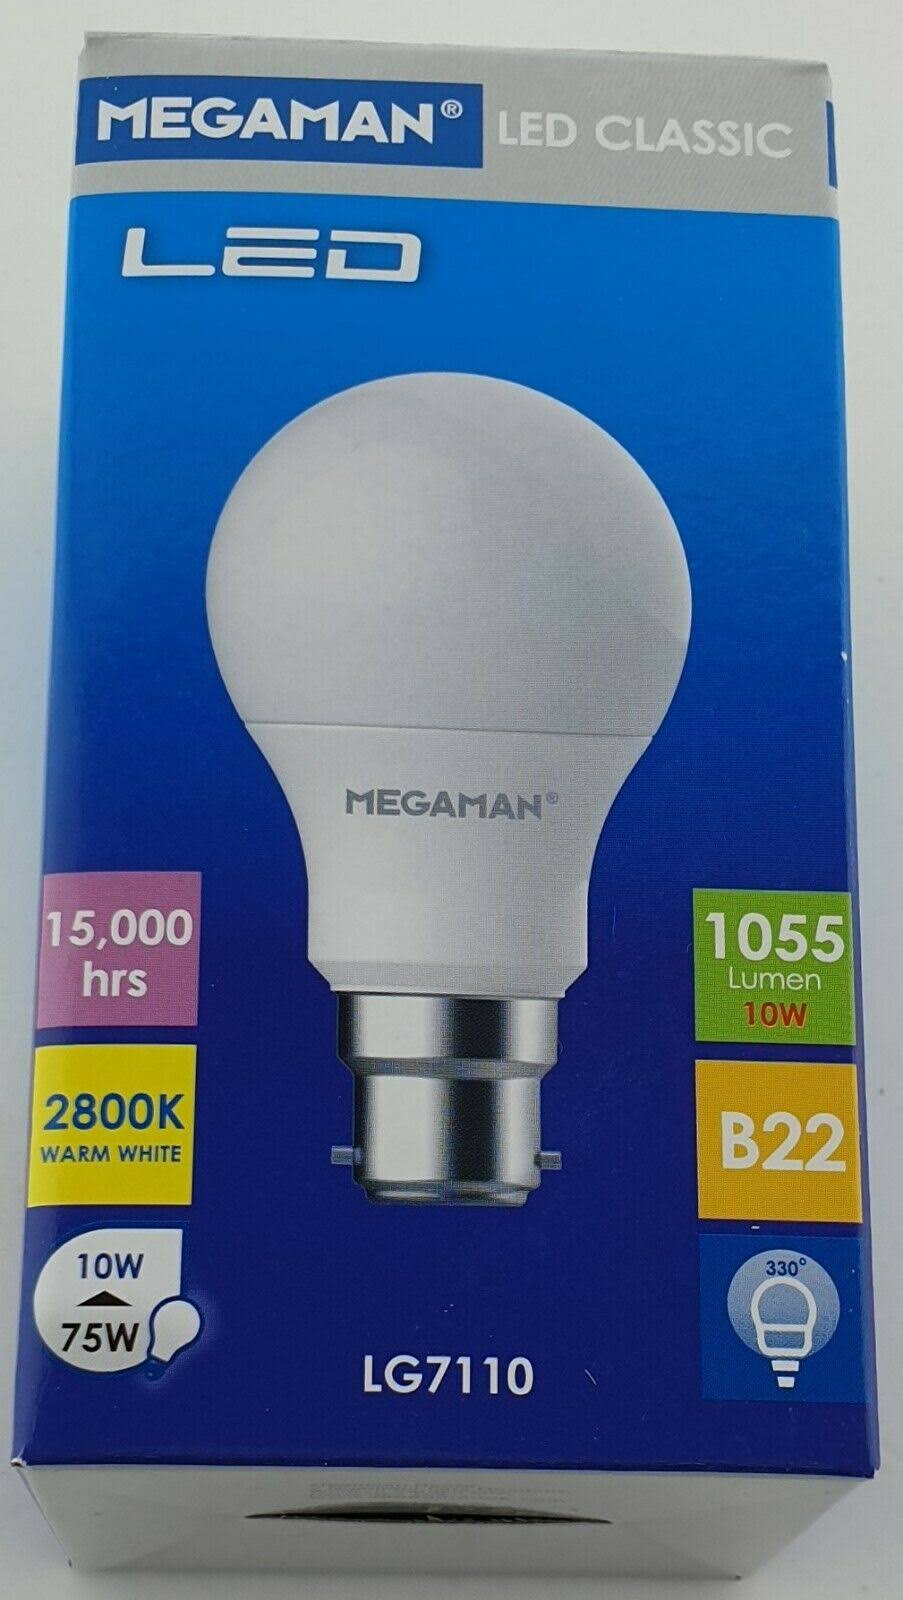 Megaman LED GLS 10W BC B22 Warm White 2800K 1055 Lumen =75w 142534